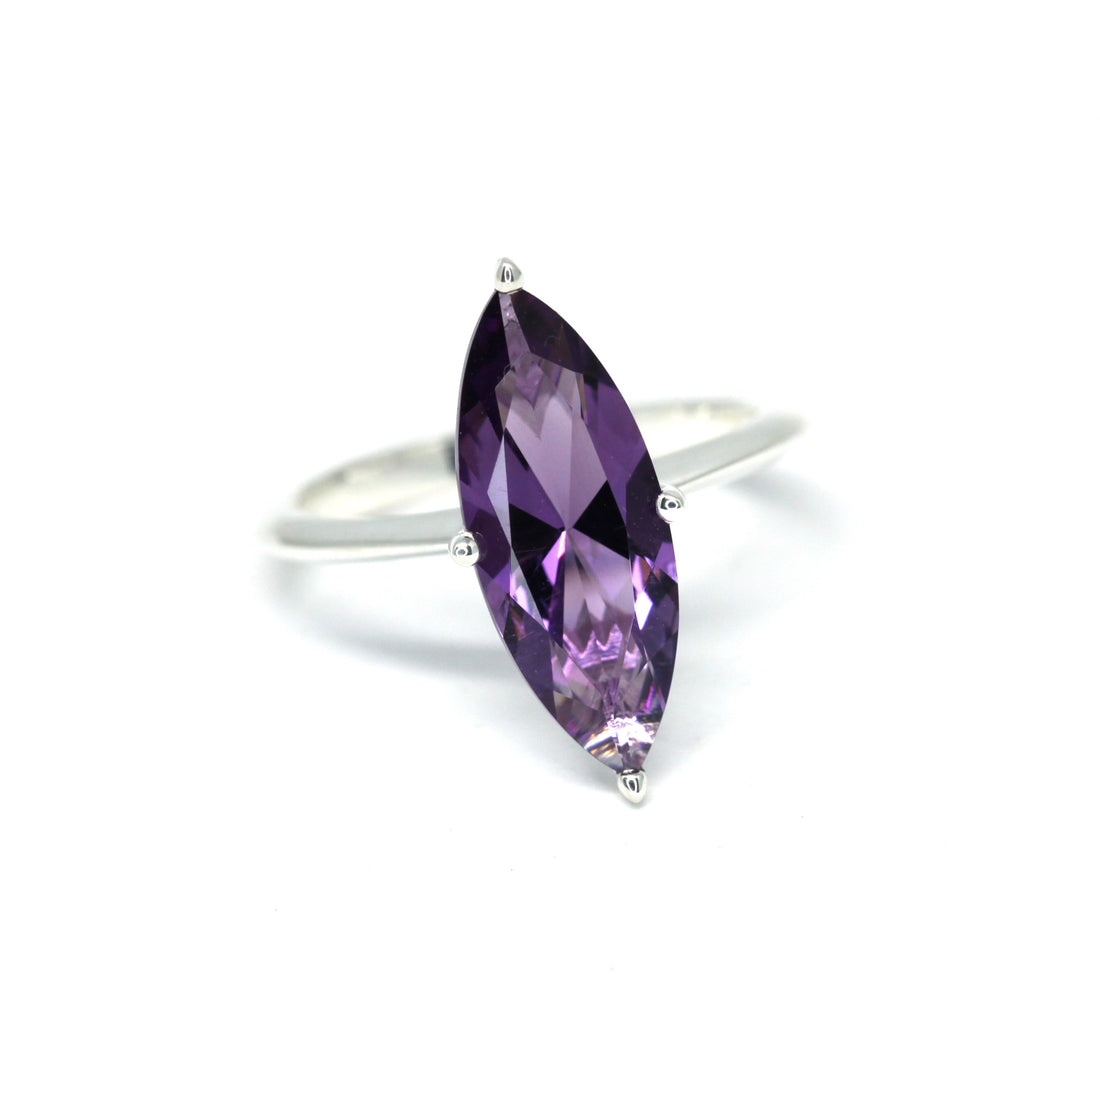 Bena Jewelry custom amethyst ring purple natural gemstone cocktail ring marquise shape big bold ring purple natural gems silver coktail jewelry